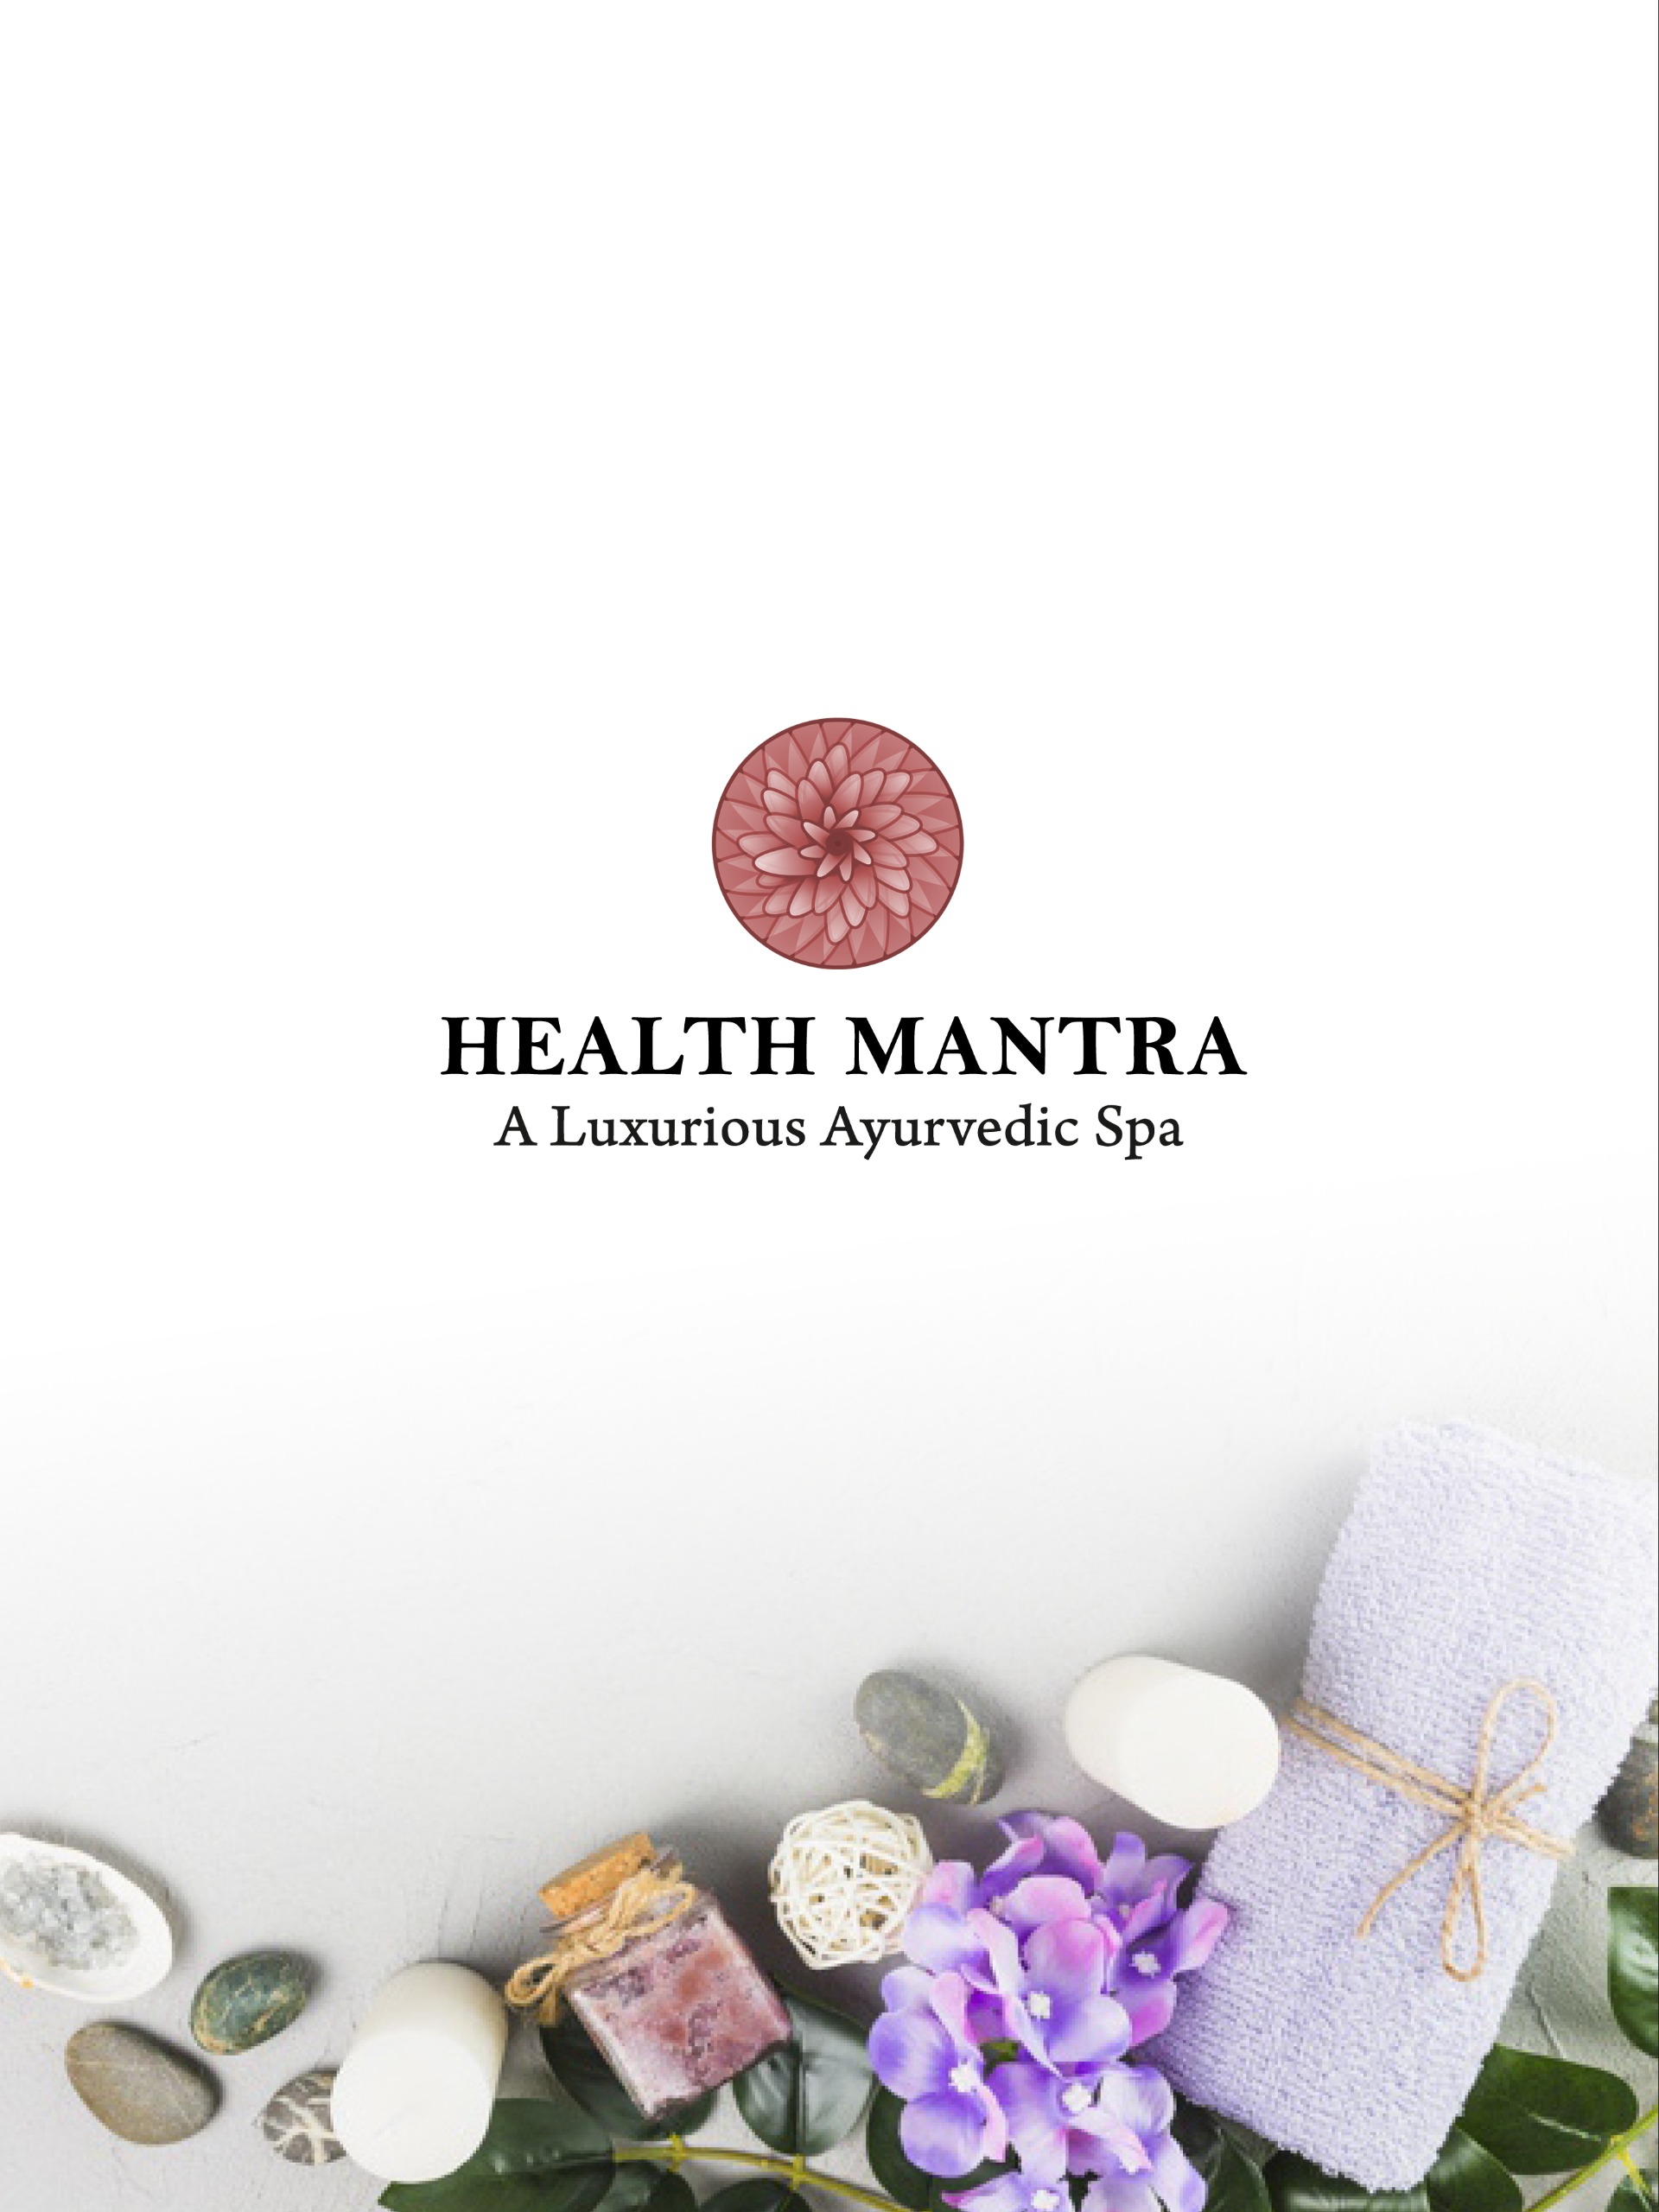 Health Mantra Spa